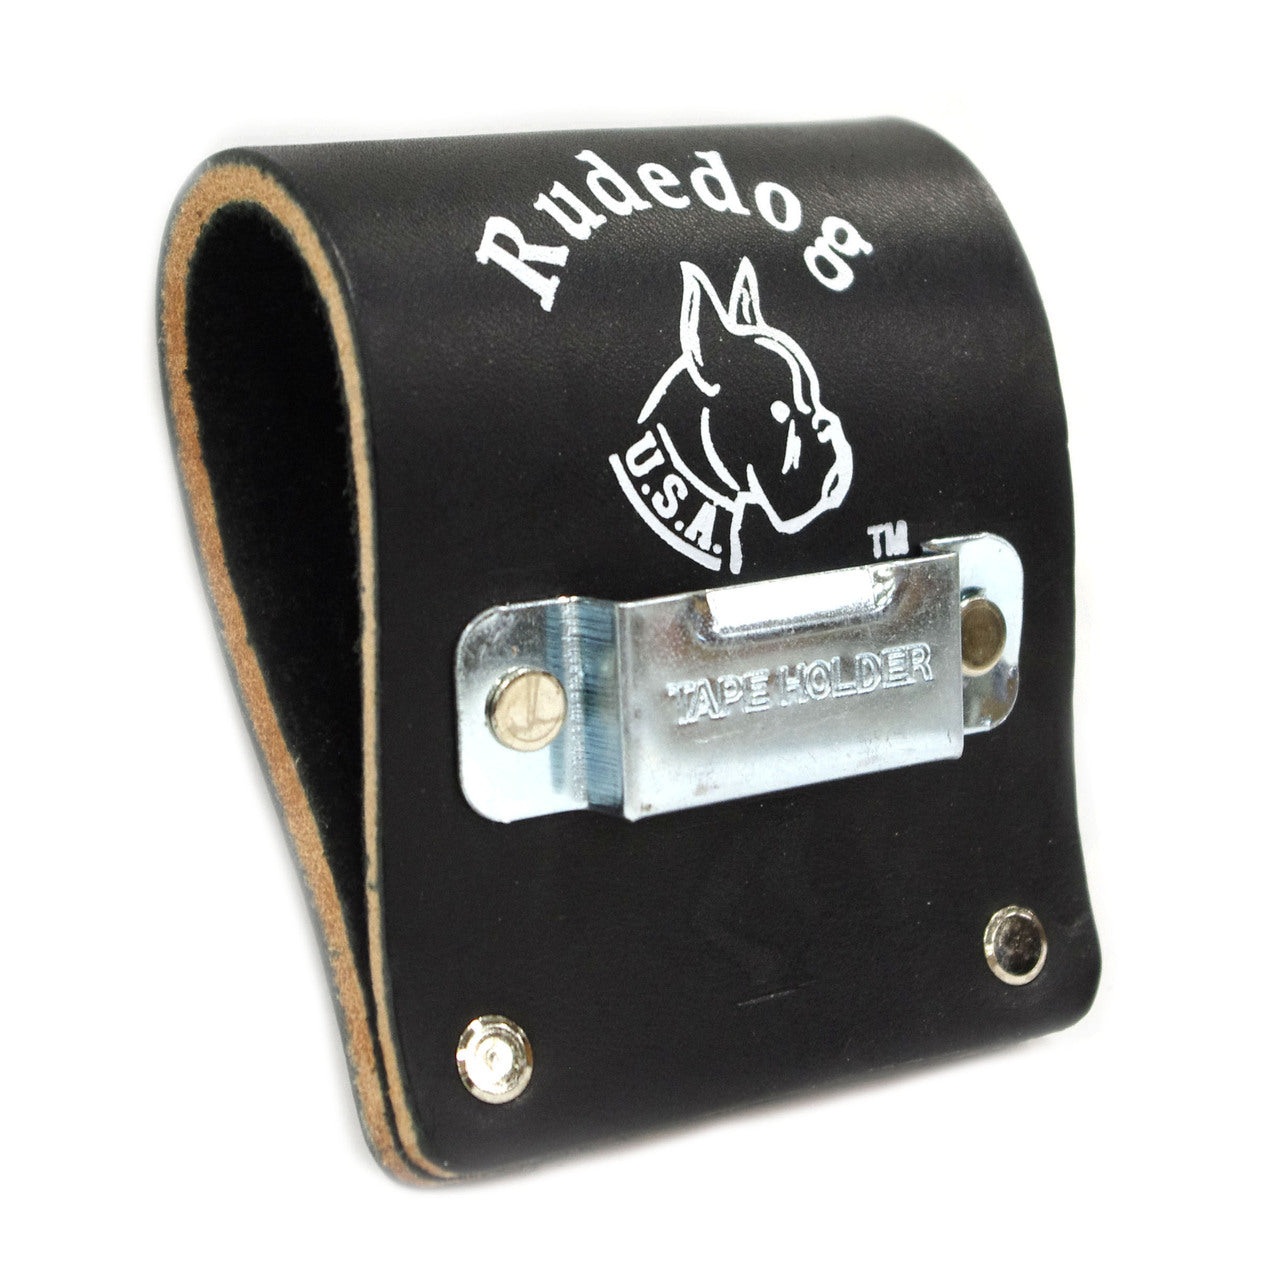 Rudedog USA 3012 Tape Measure Holder